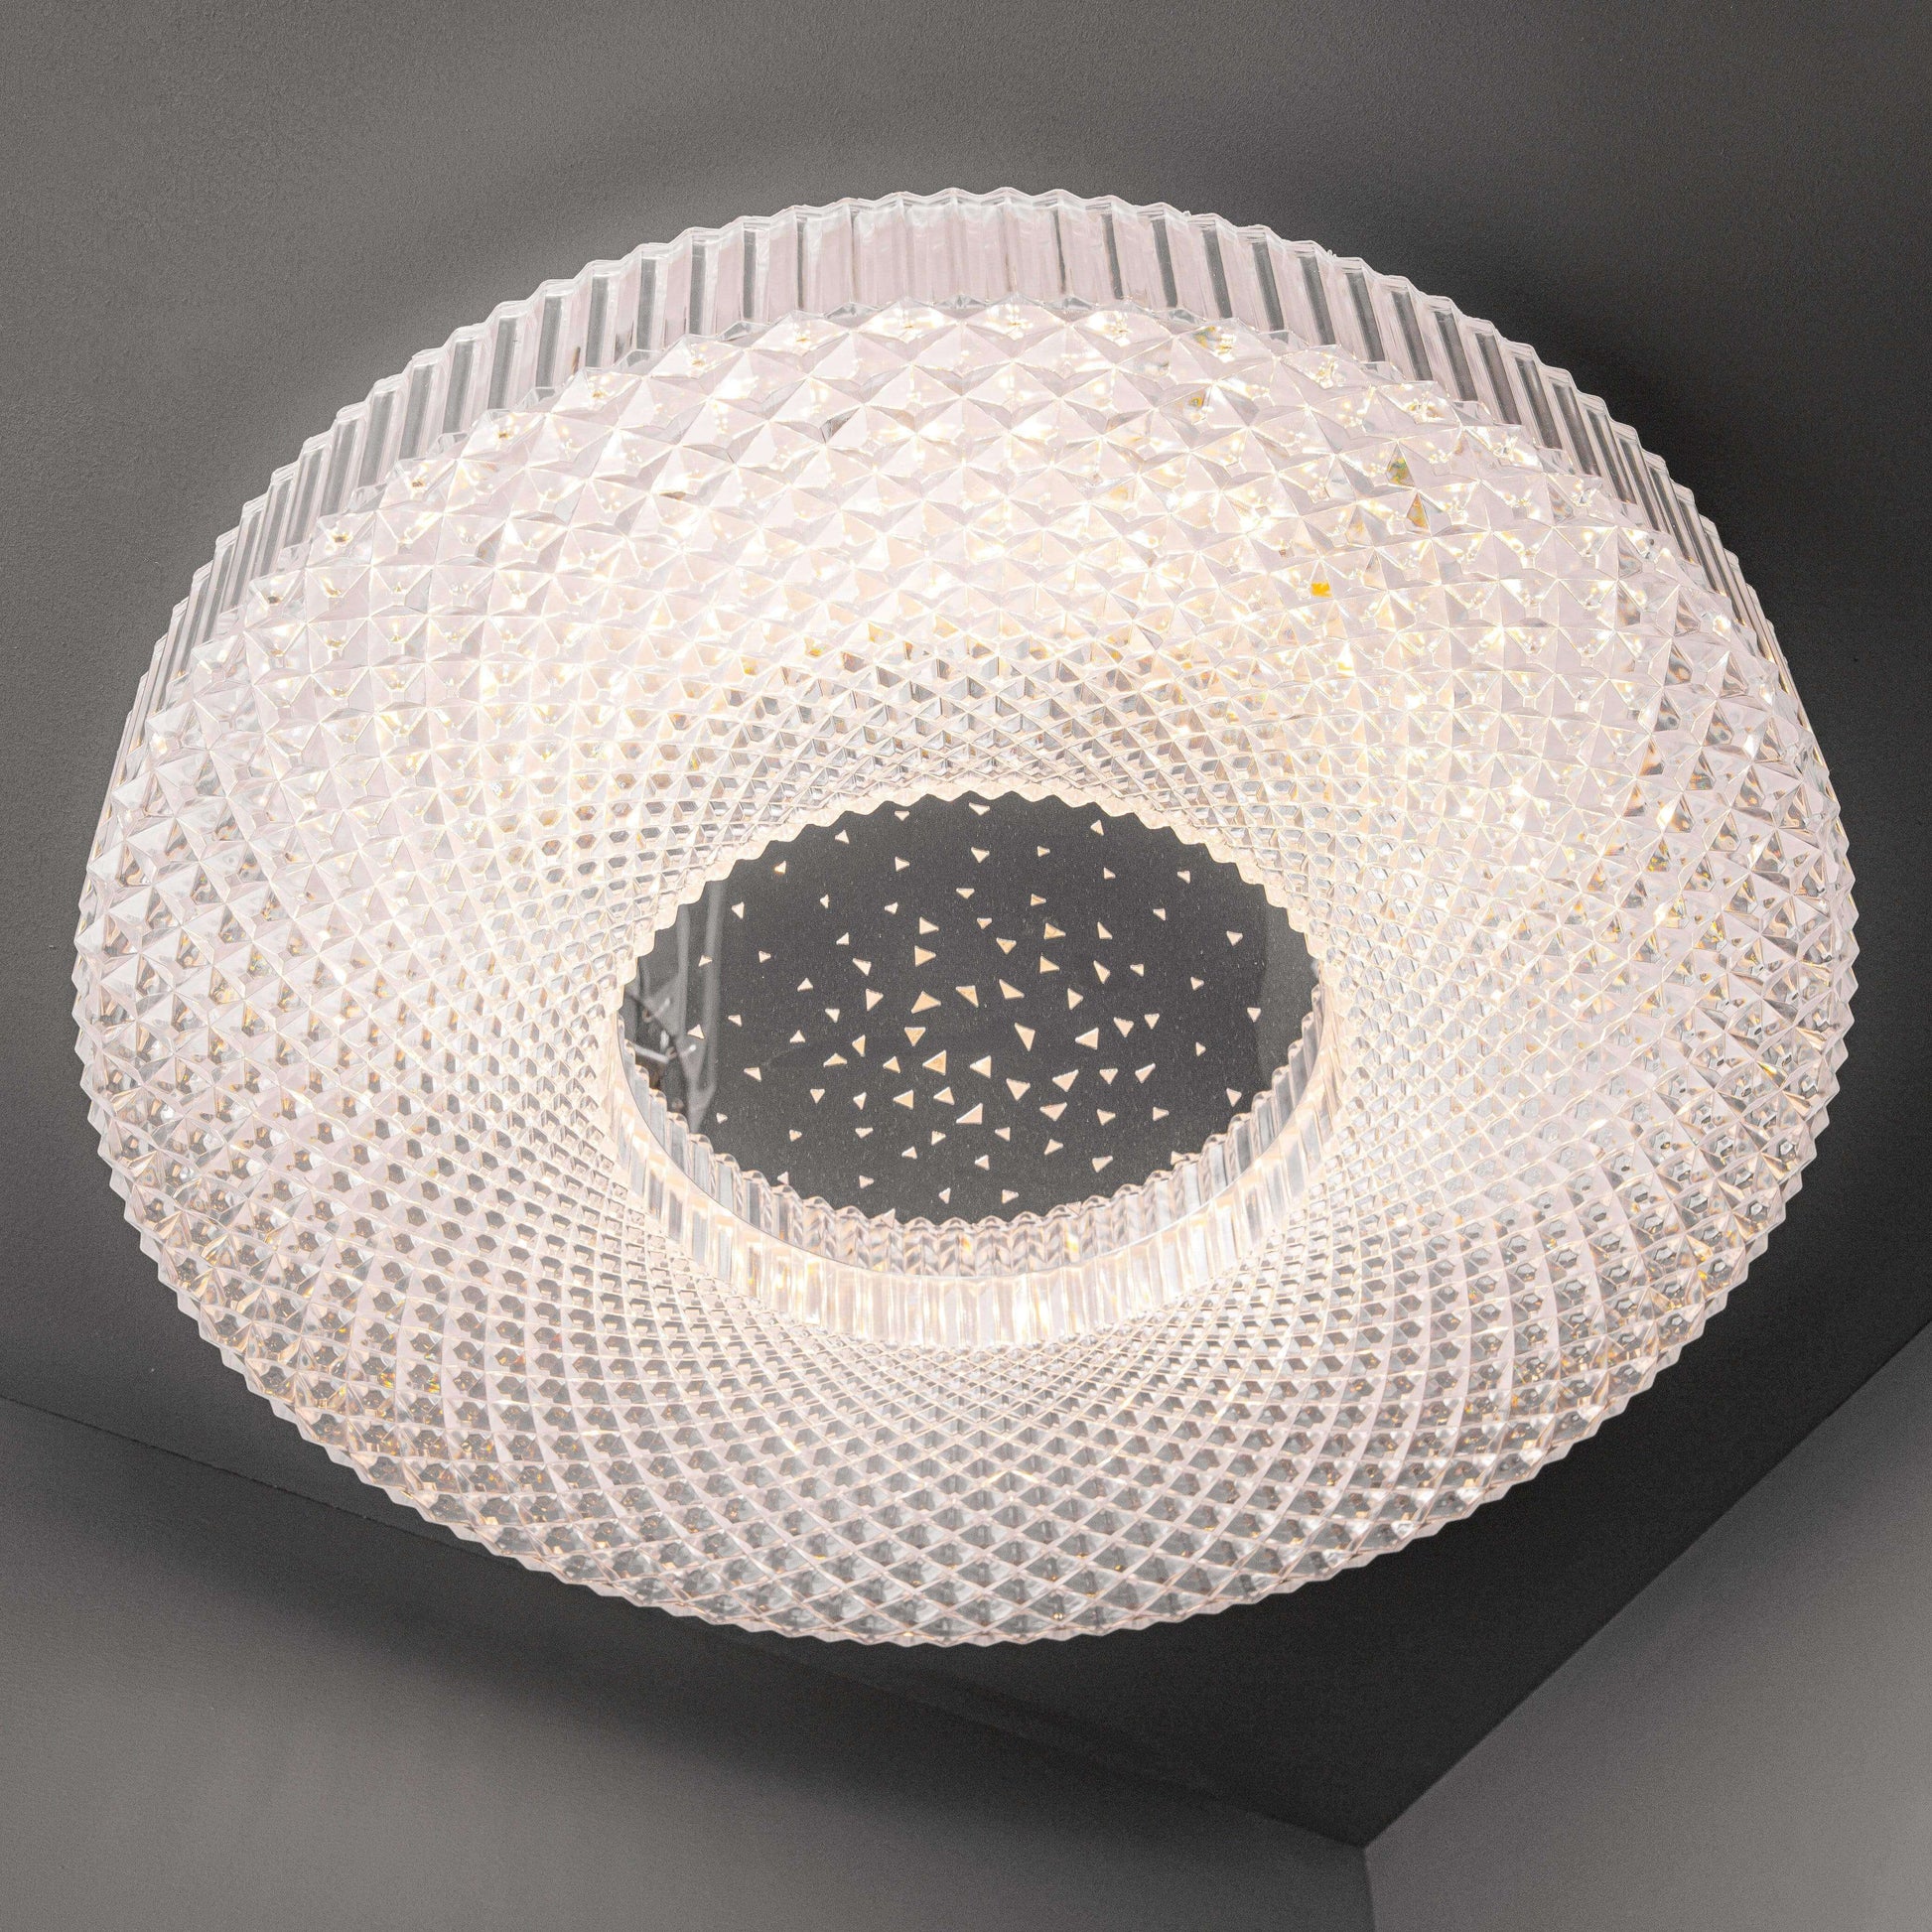 Lights  -  Cimona Acrylic Medium Flush Led Ceiling Light  -  50150468